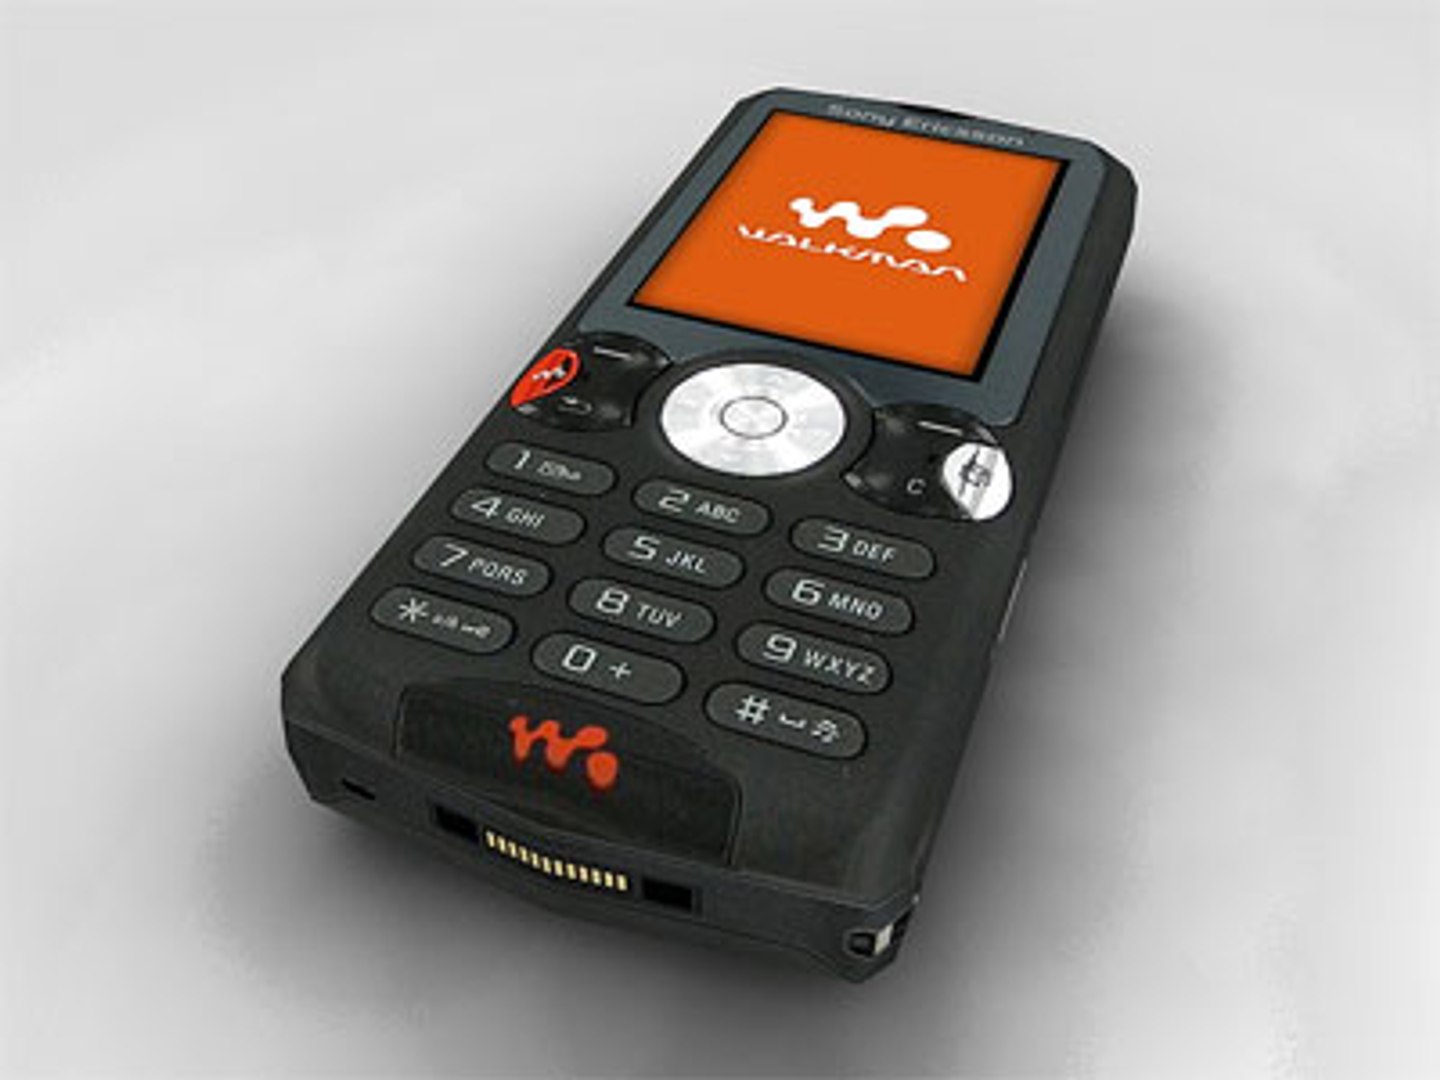 Sony Ericsson w880i - - 3D Warehouse